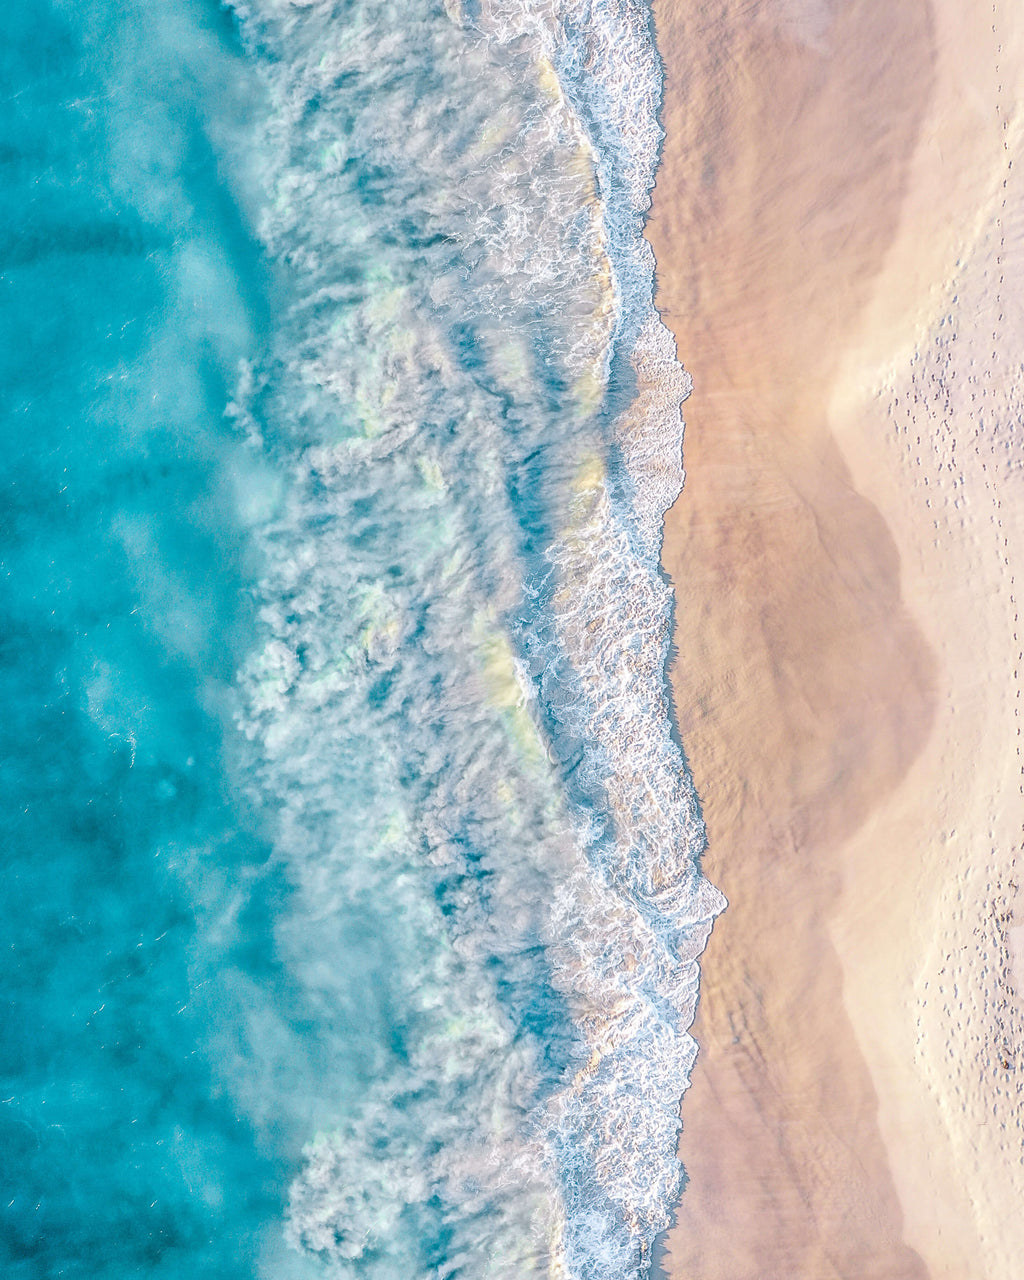 Mullaloo Beach, Perth, Western Australia